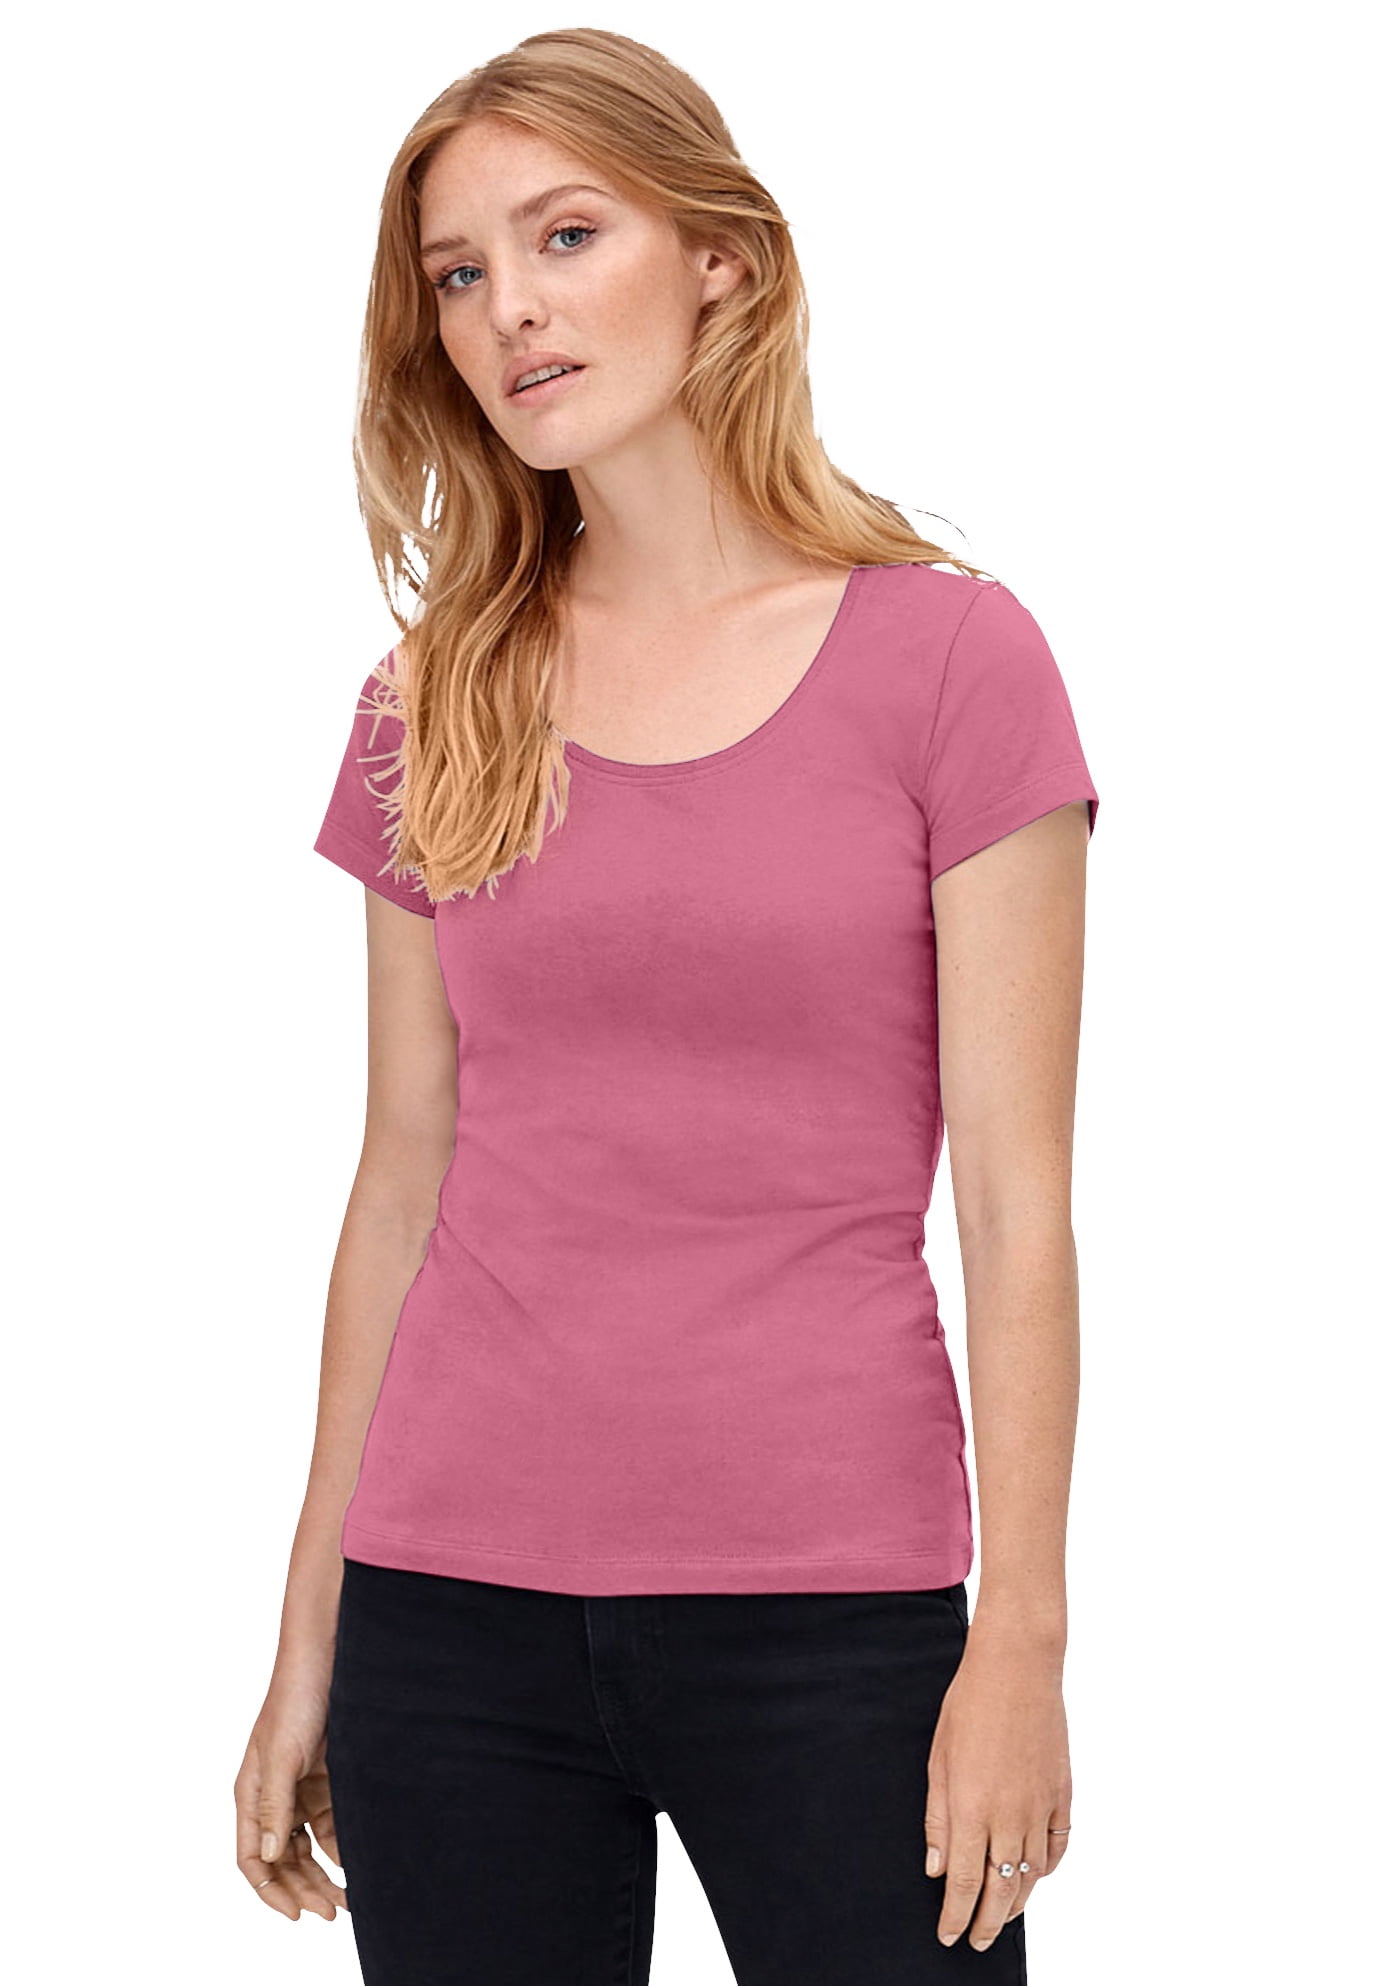 Ellos - ellos Women's Plus Size Scoop Neck Tee T-Shirt - 14/16, Rose ...